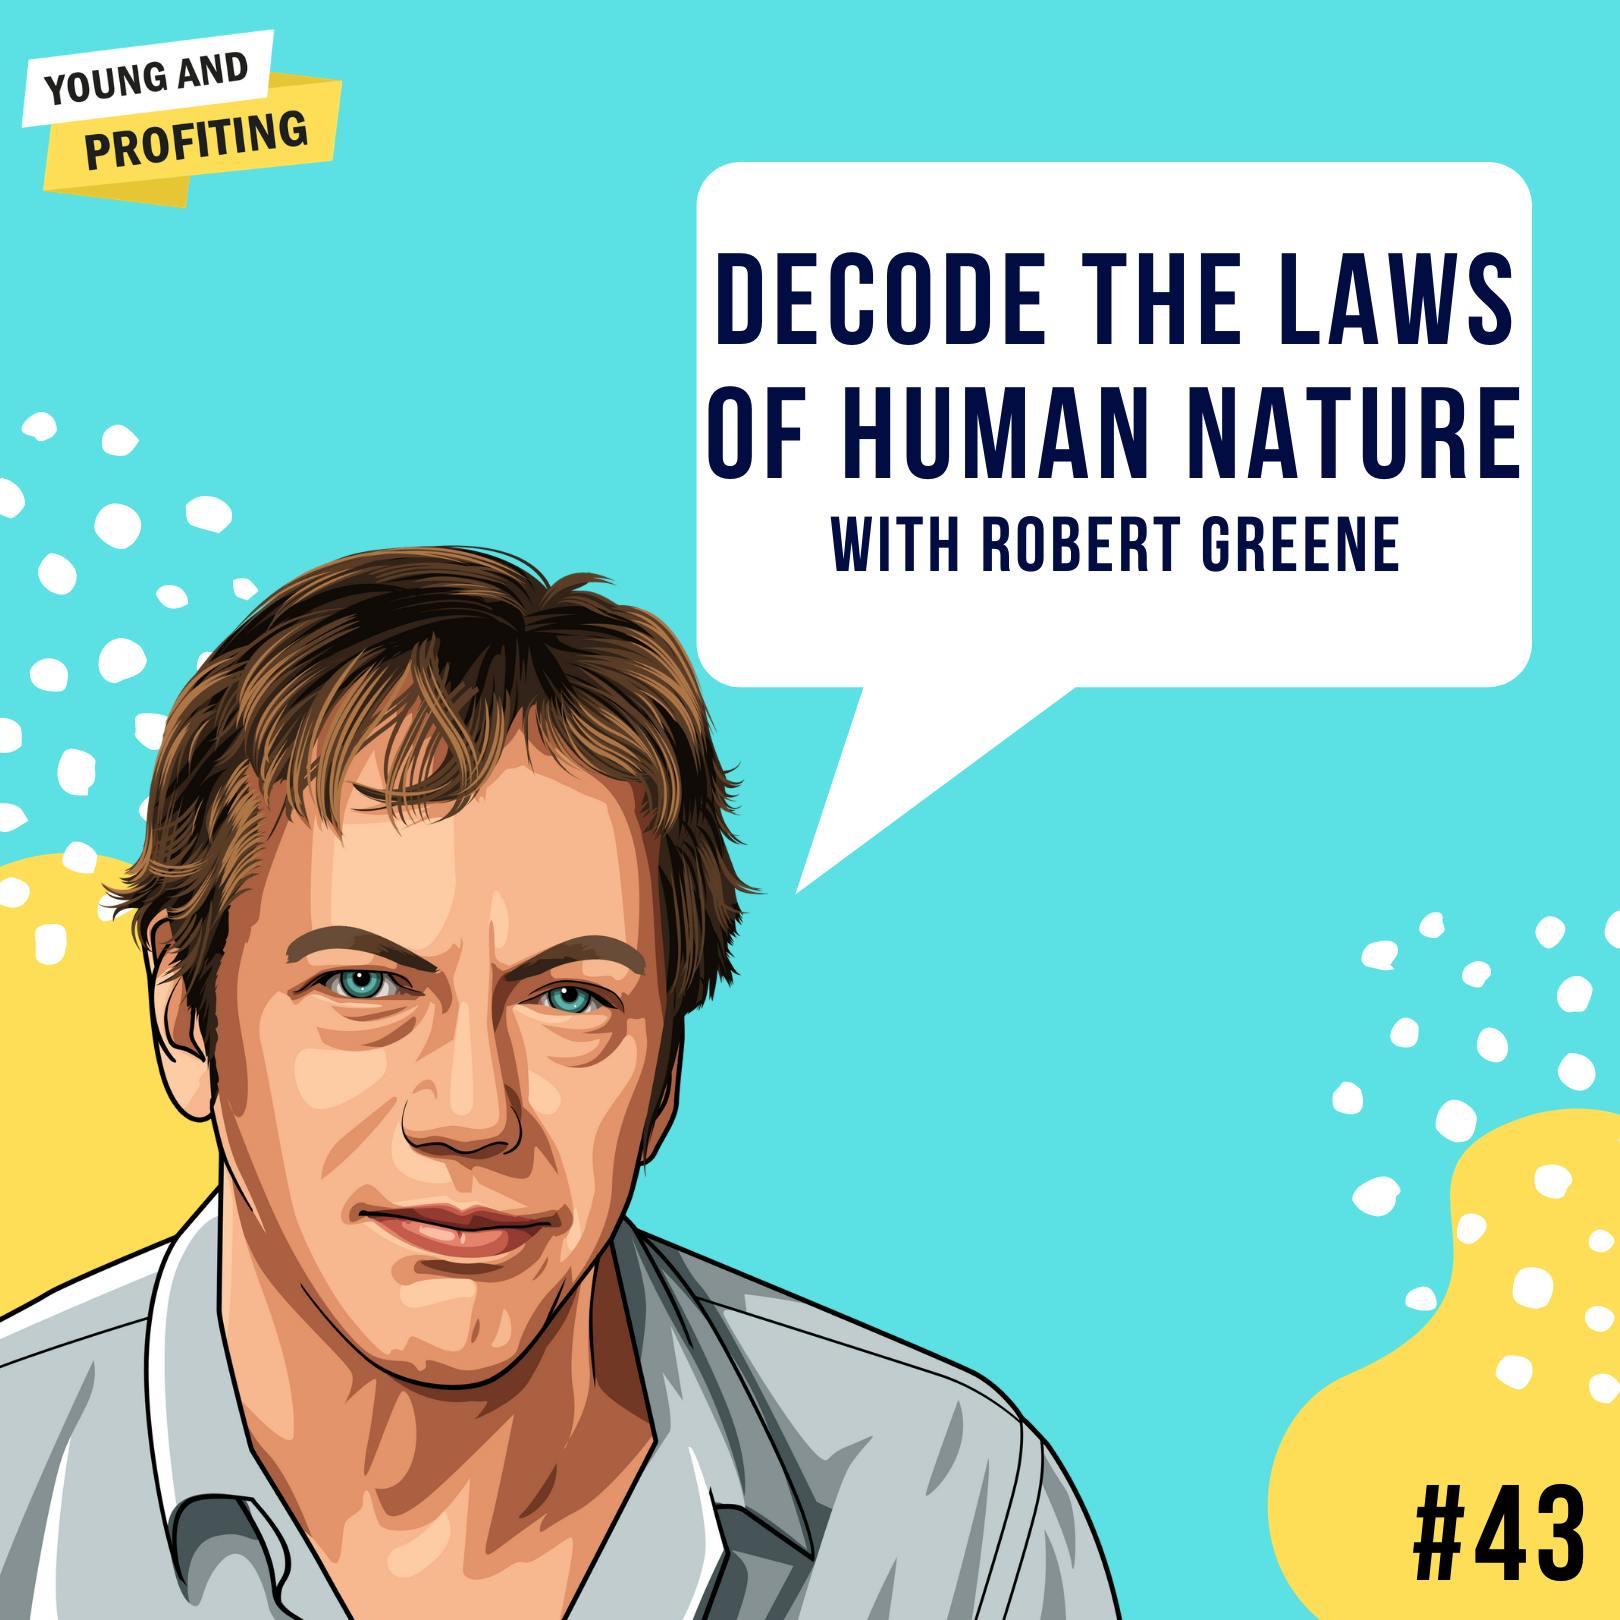 Robert Greene [Part 1] : Decoding the Laws of Human Nature | E43